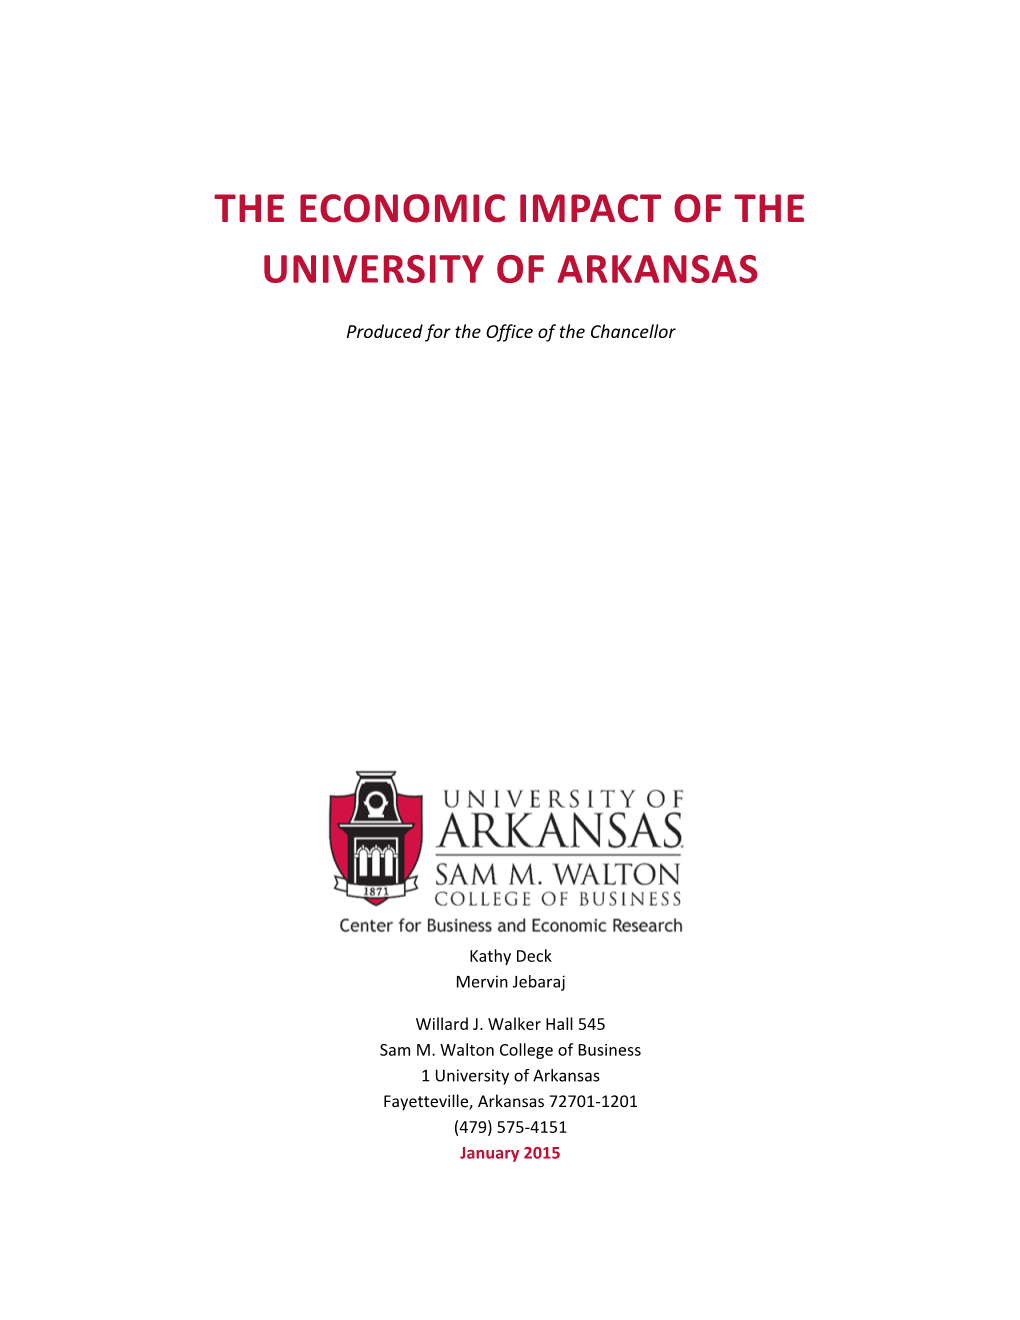 The Economic Impact of the University of Arkansas